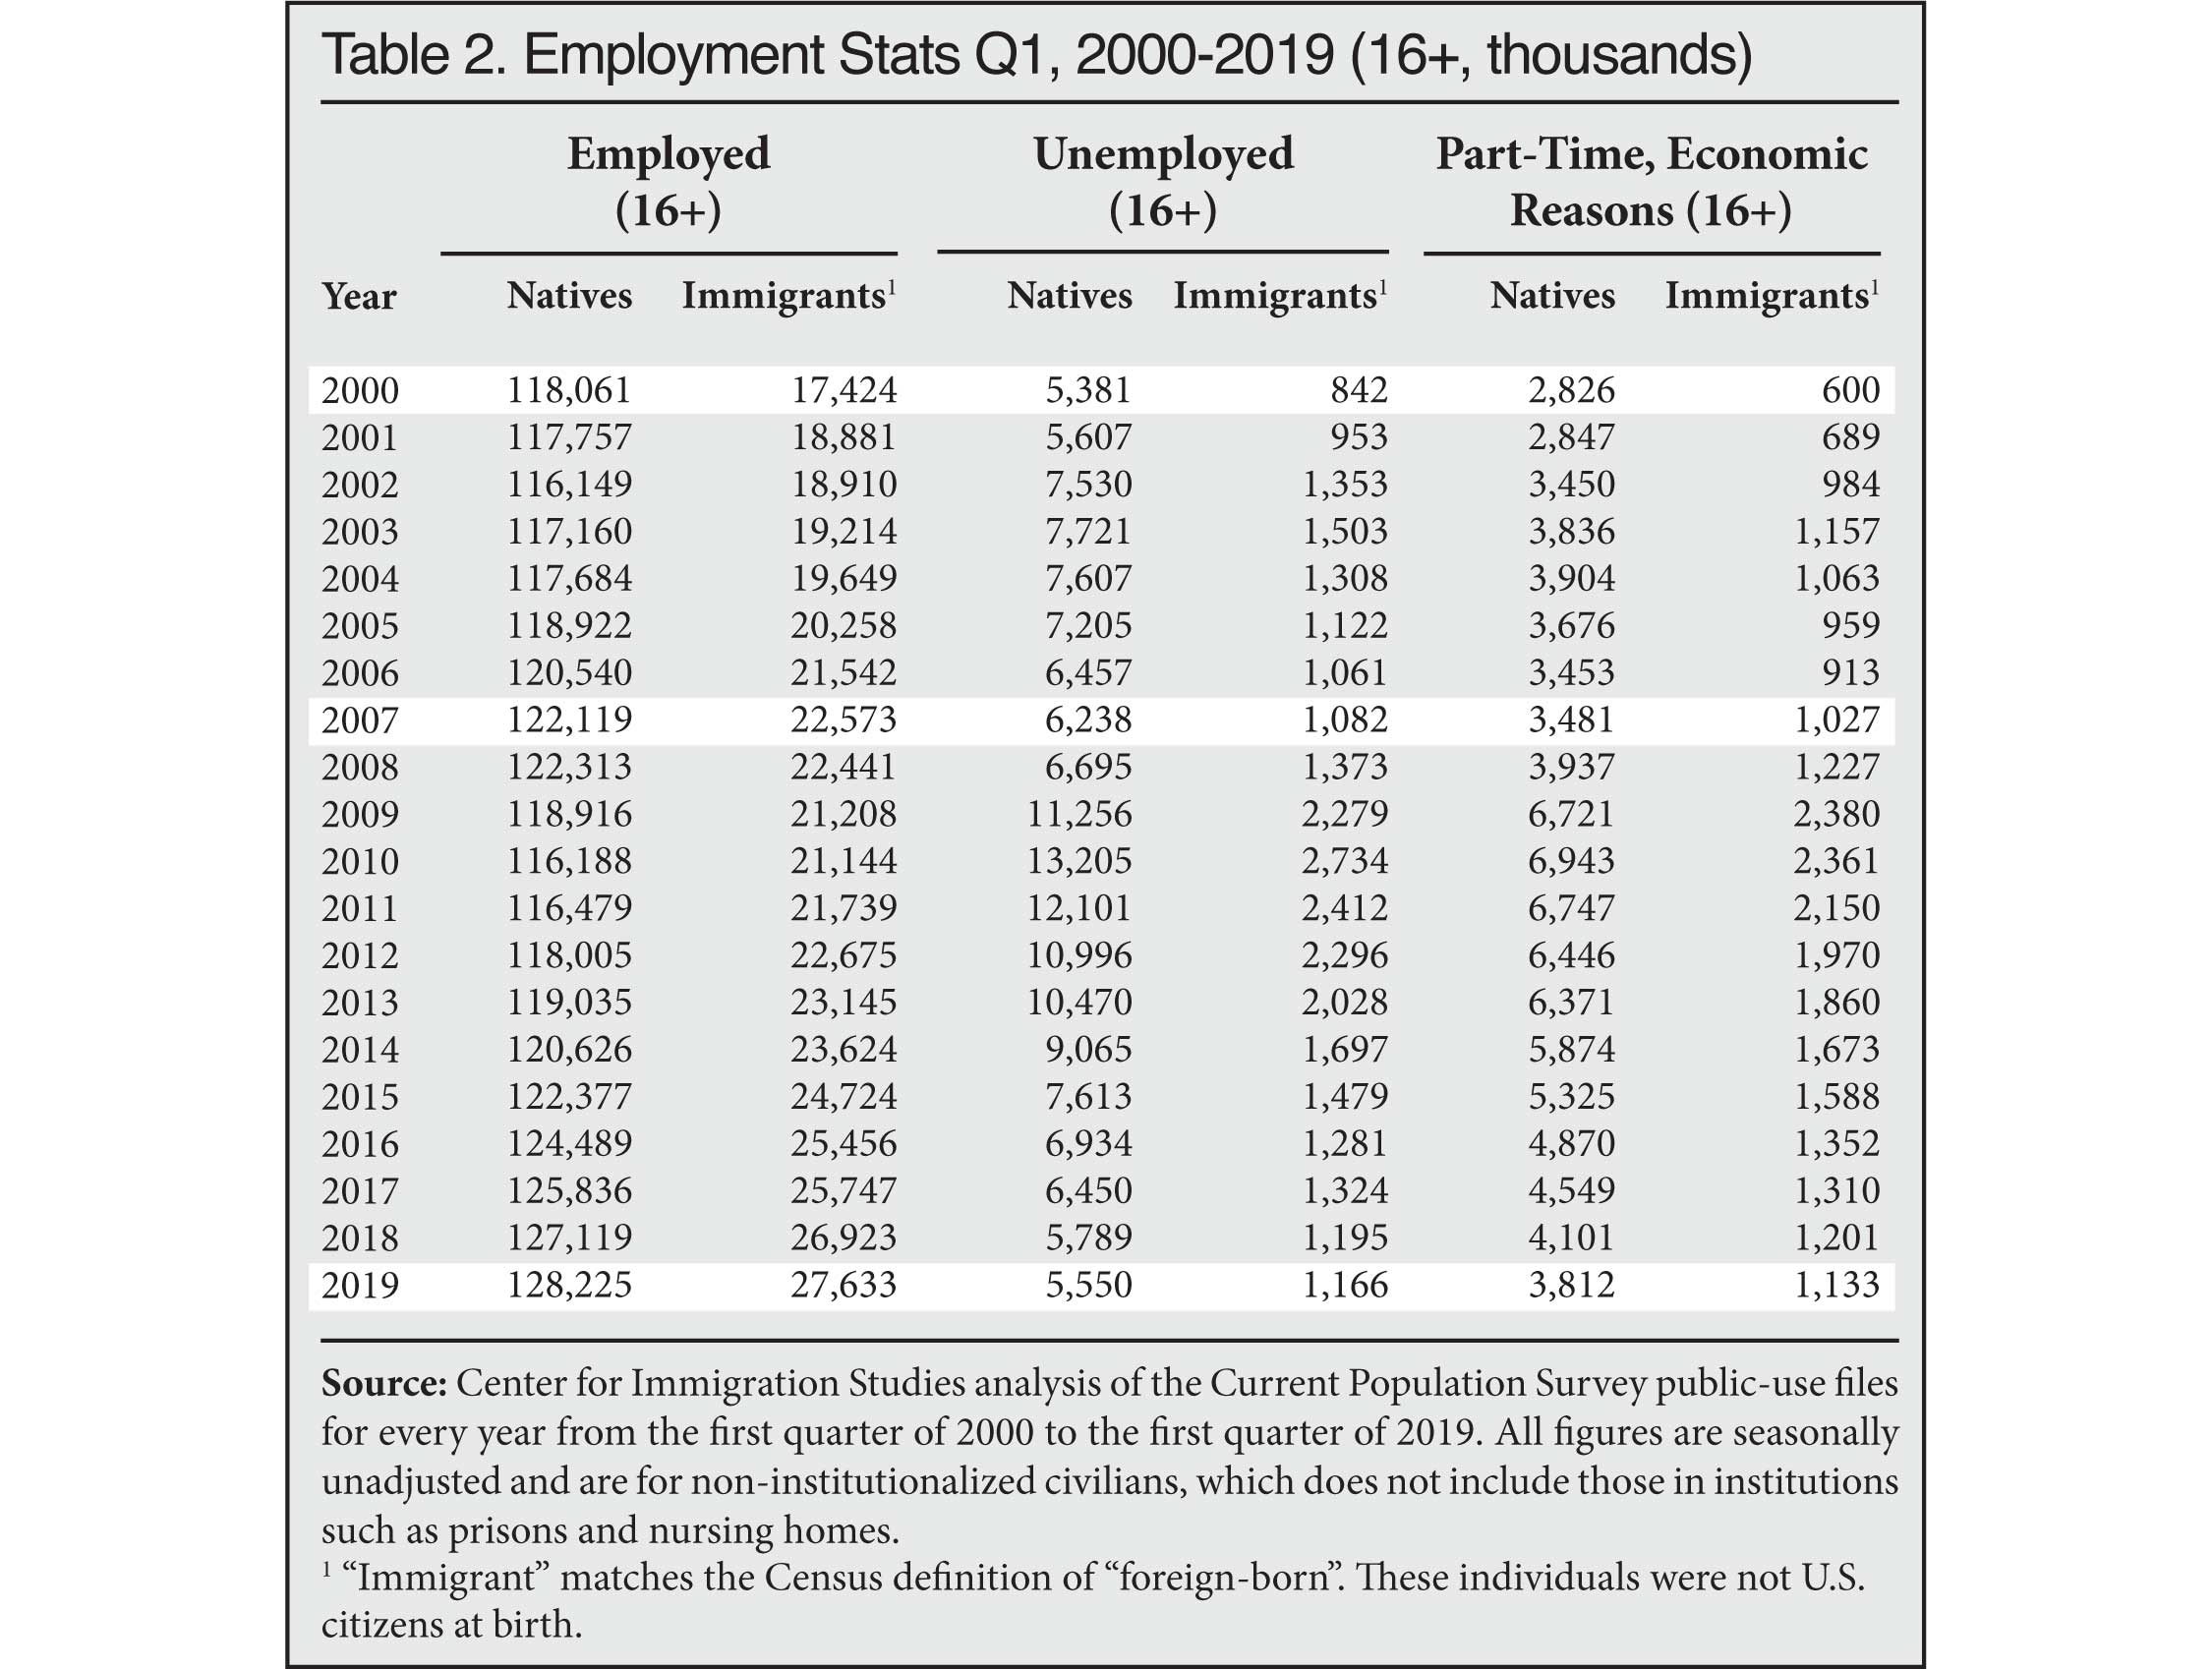 Table: Employment Statistics Q1, 2000-2019